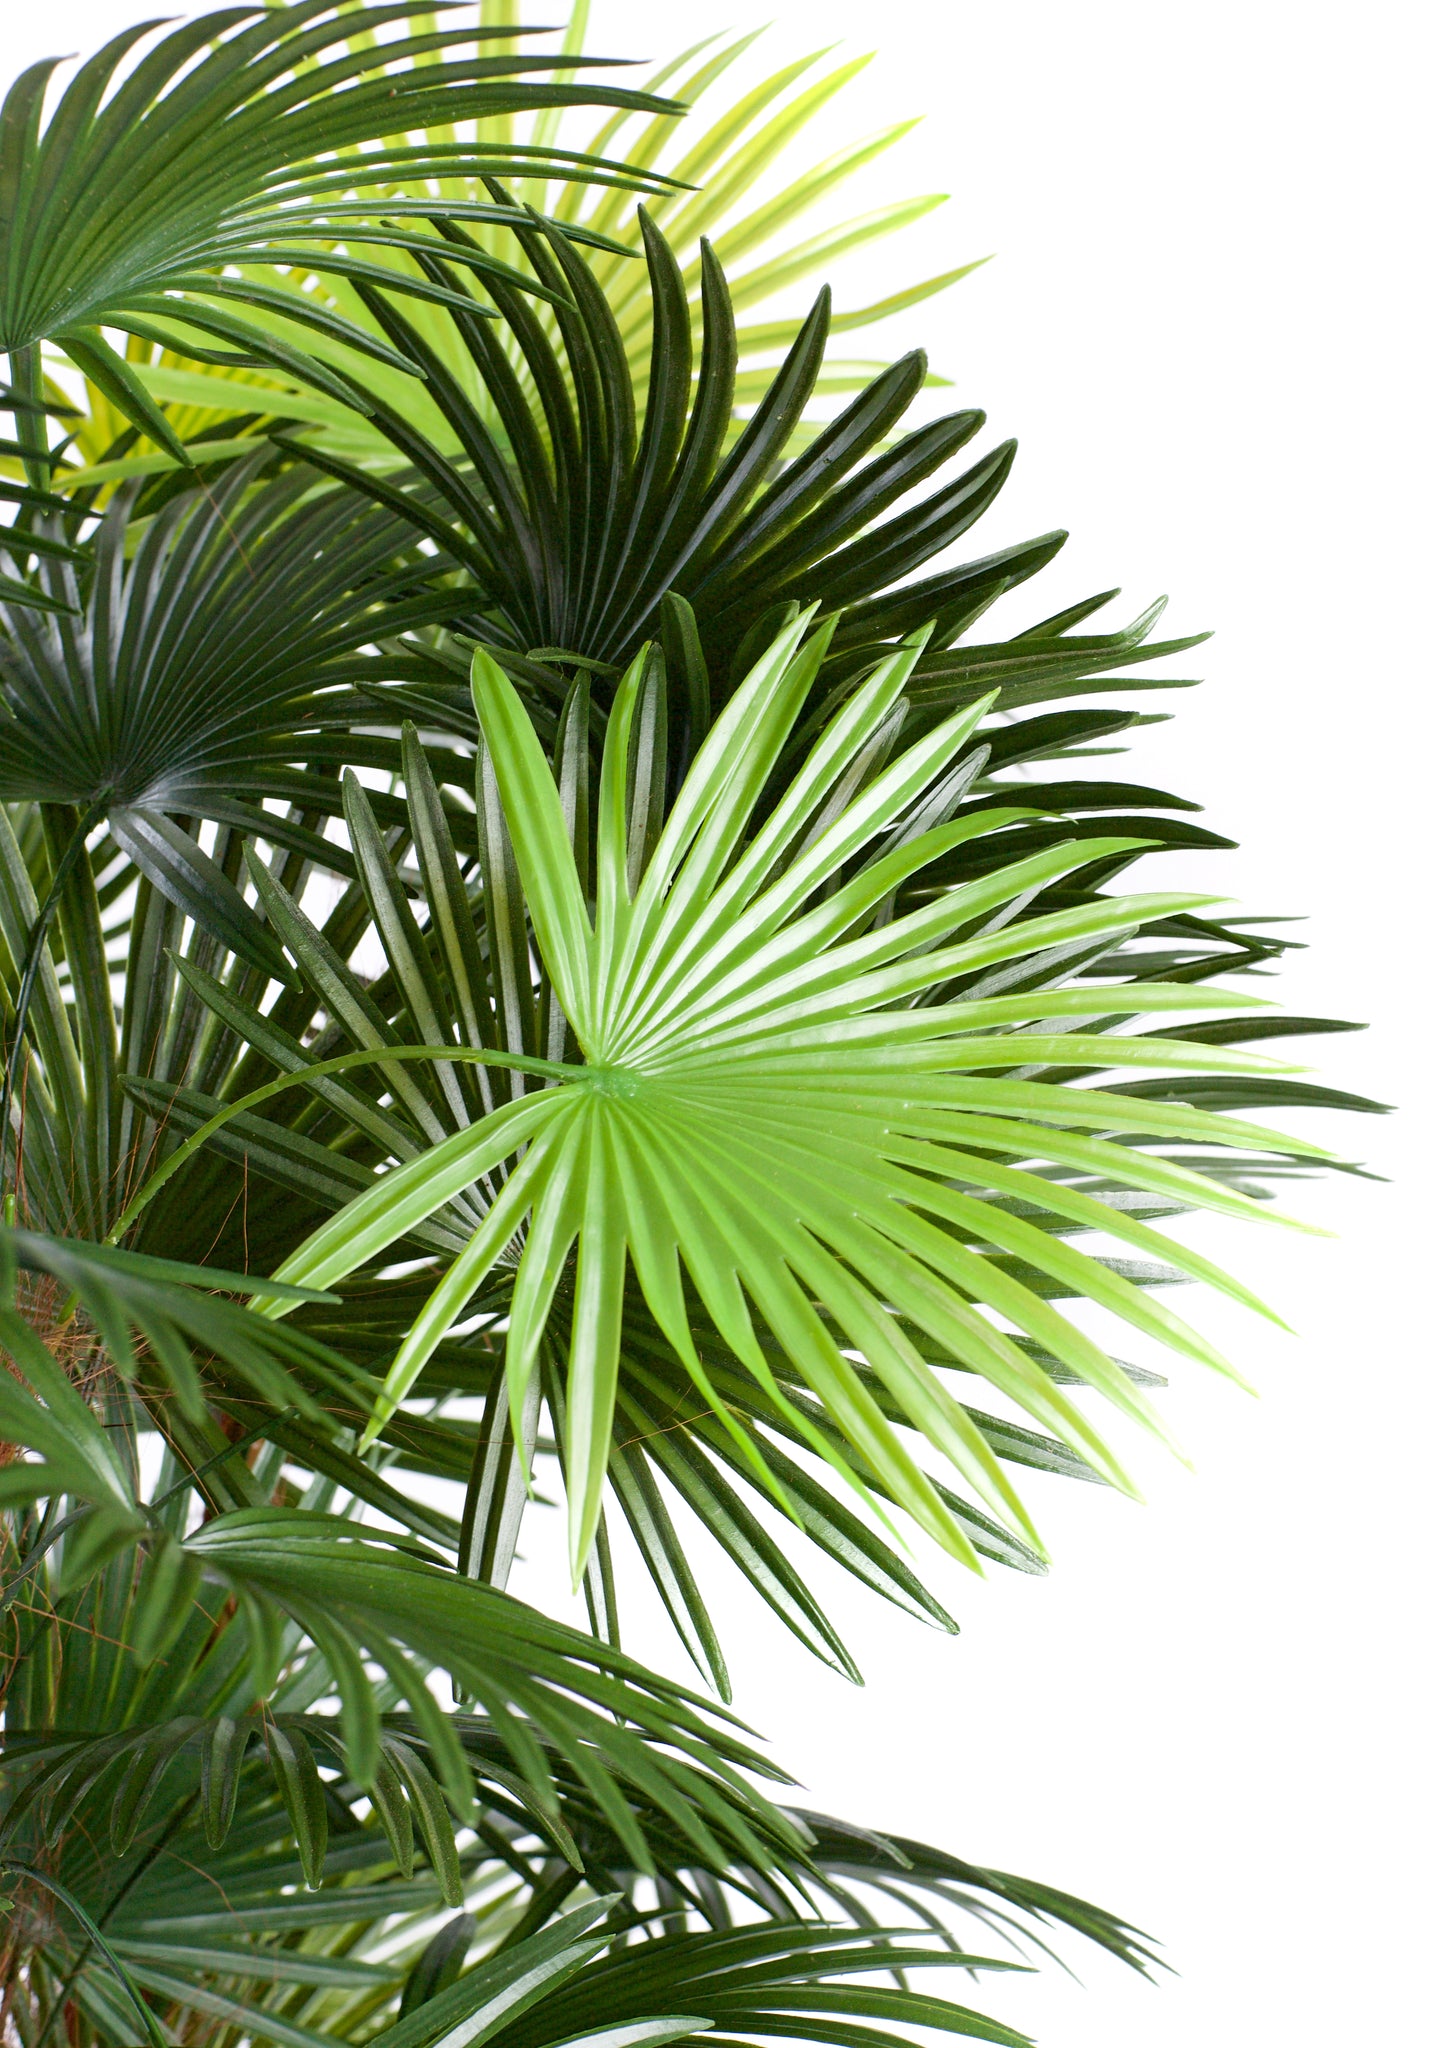 Best Artificial Spider Finger Palm Tree